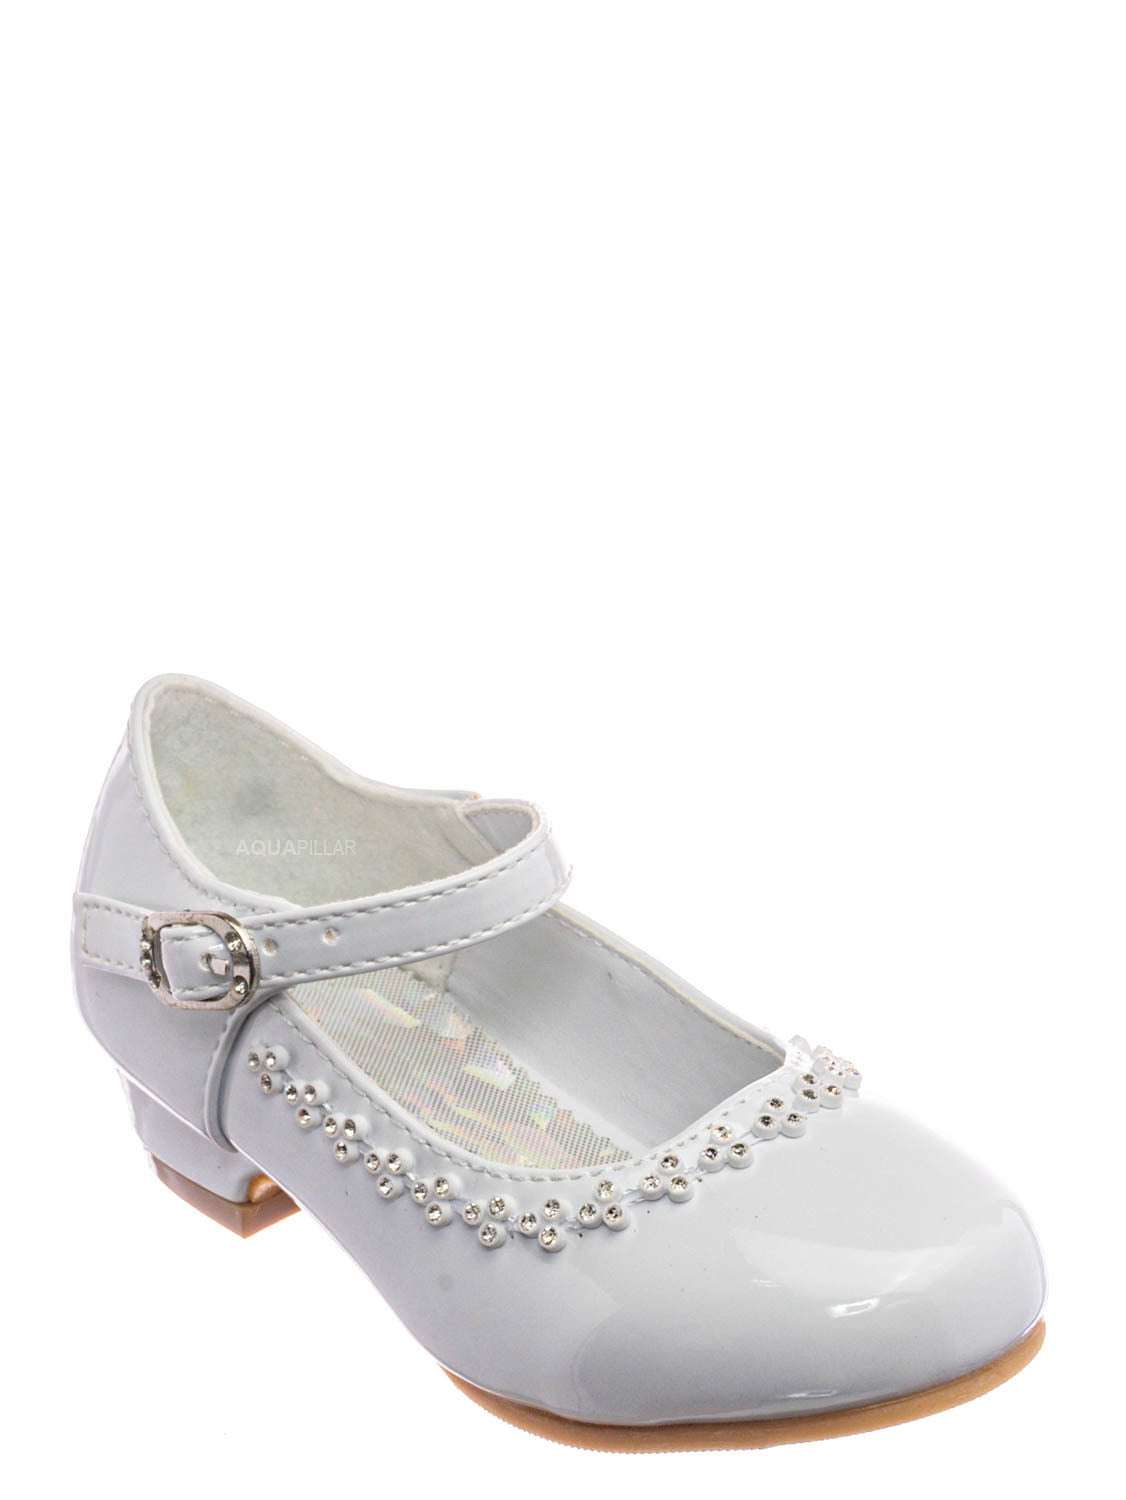 Girls Children White Heeled Sparkly Holy Communion Bridesmaid Shoes Socks Set 